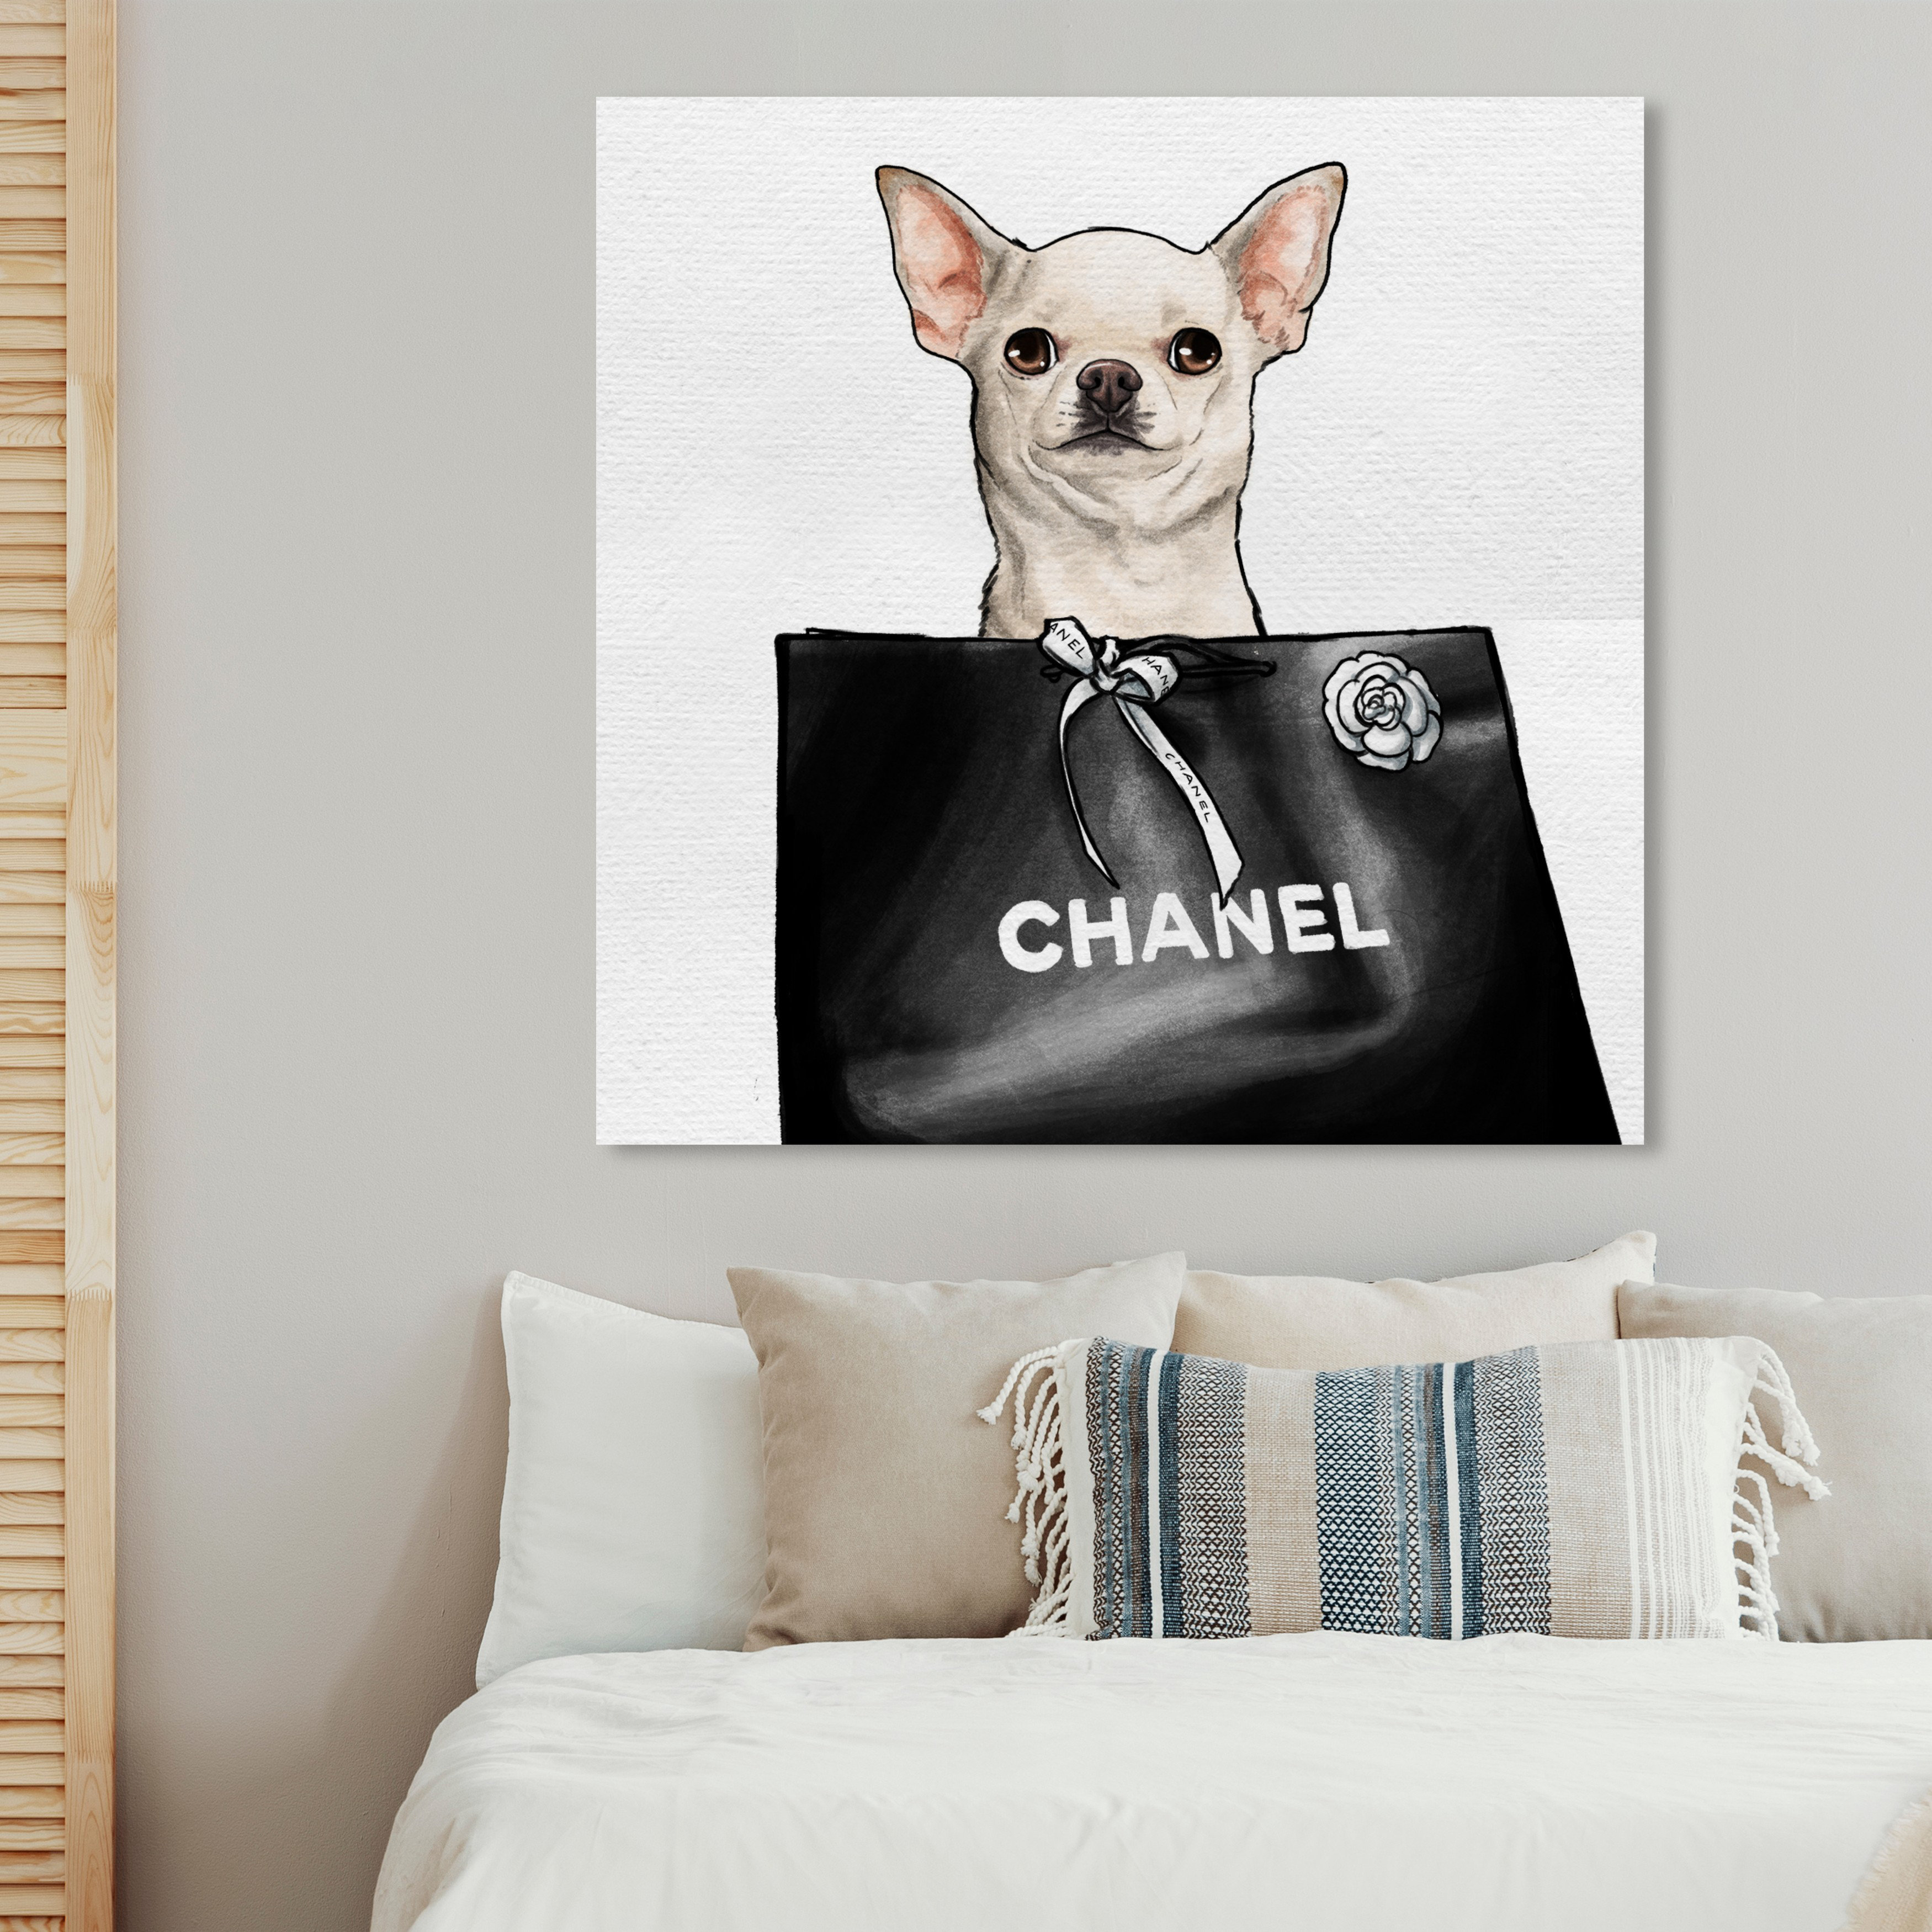 Buy Glam Room Decor - Chihuahua Decor - High Fashion Design Wall